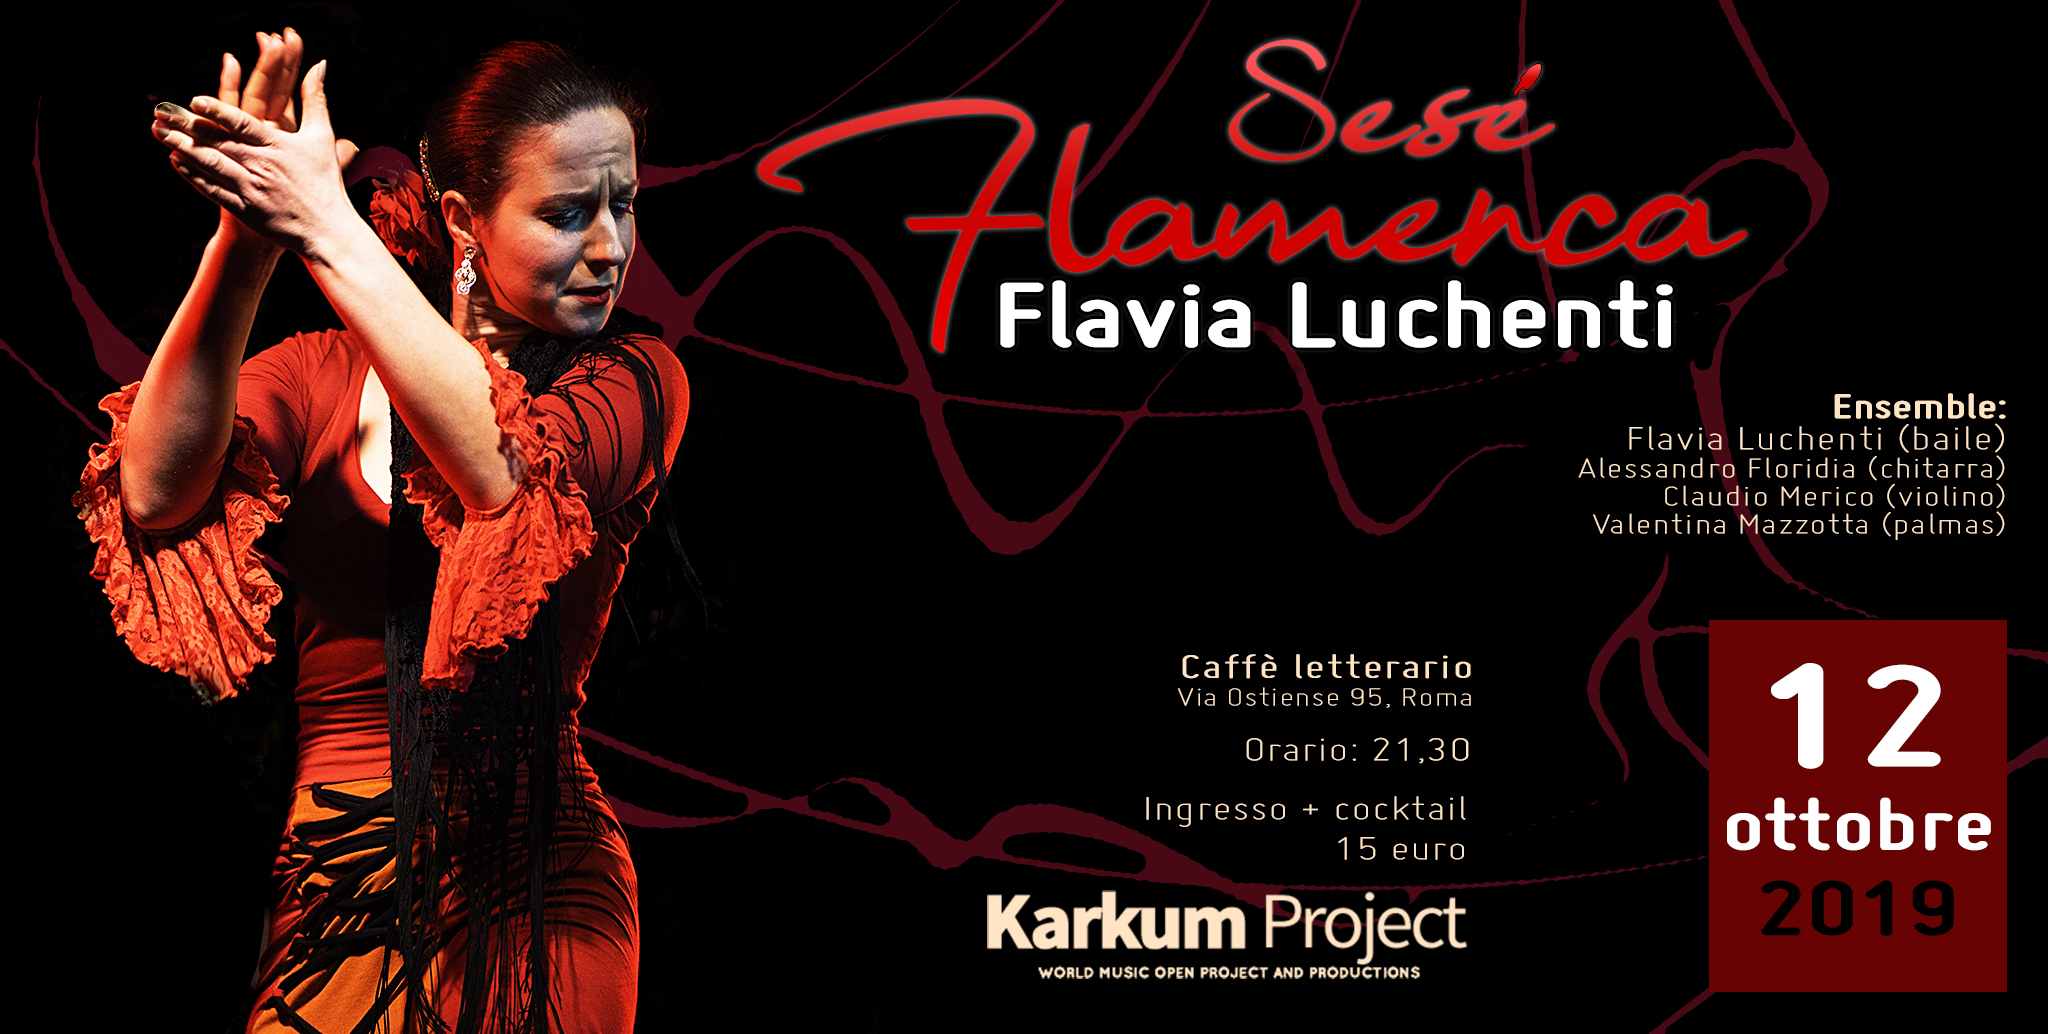 flavia luchenti sese flamenca caffe letterario roma